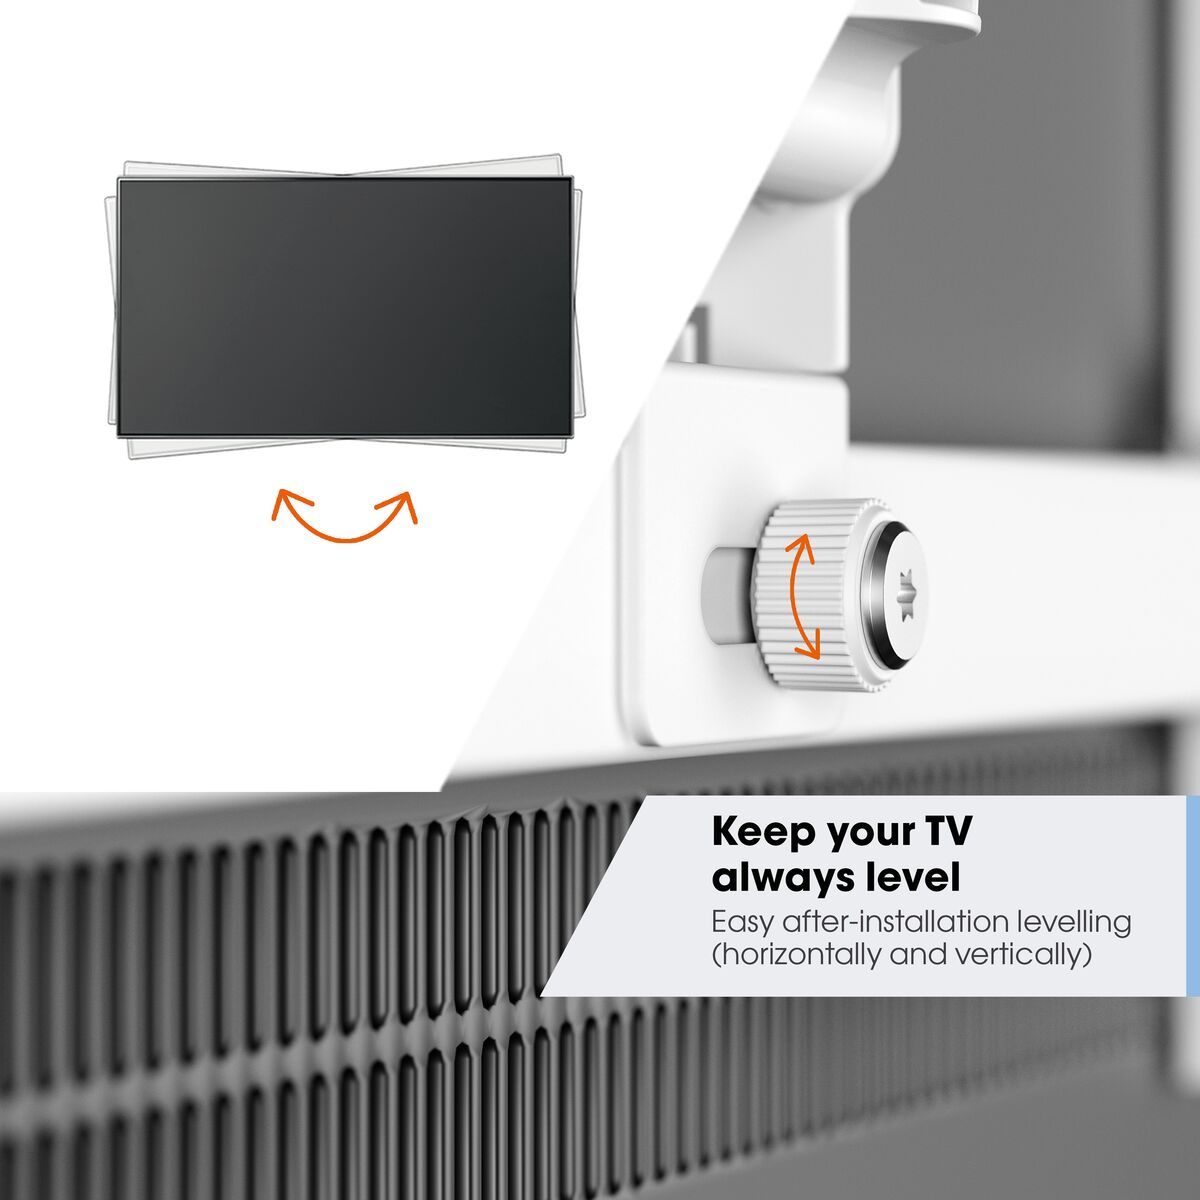 Vogel's TVM 3445 Full-Motion TV Wall Mount (white) - Suitable for 32 up to 65 inch TVs - Full motion (up to 180°) swivel - Tilt up to 20° - USP